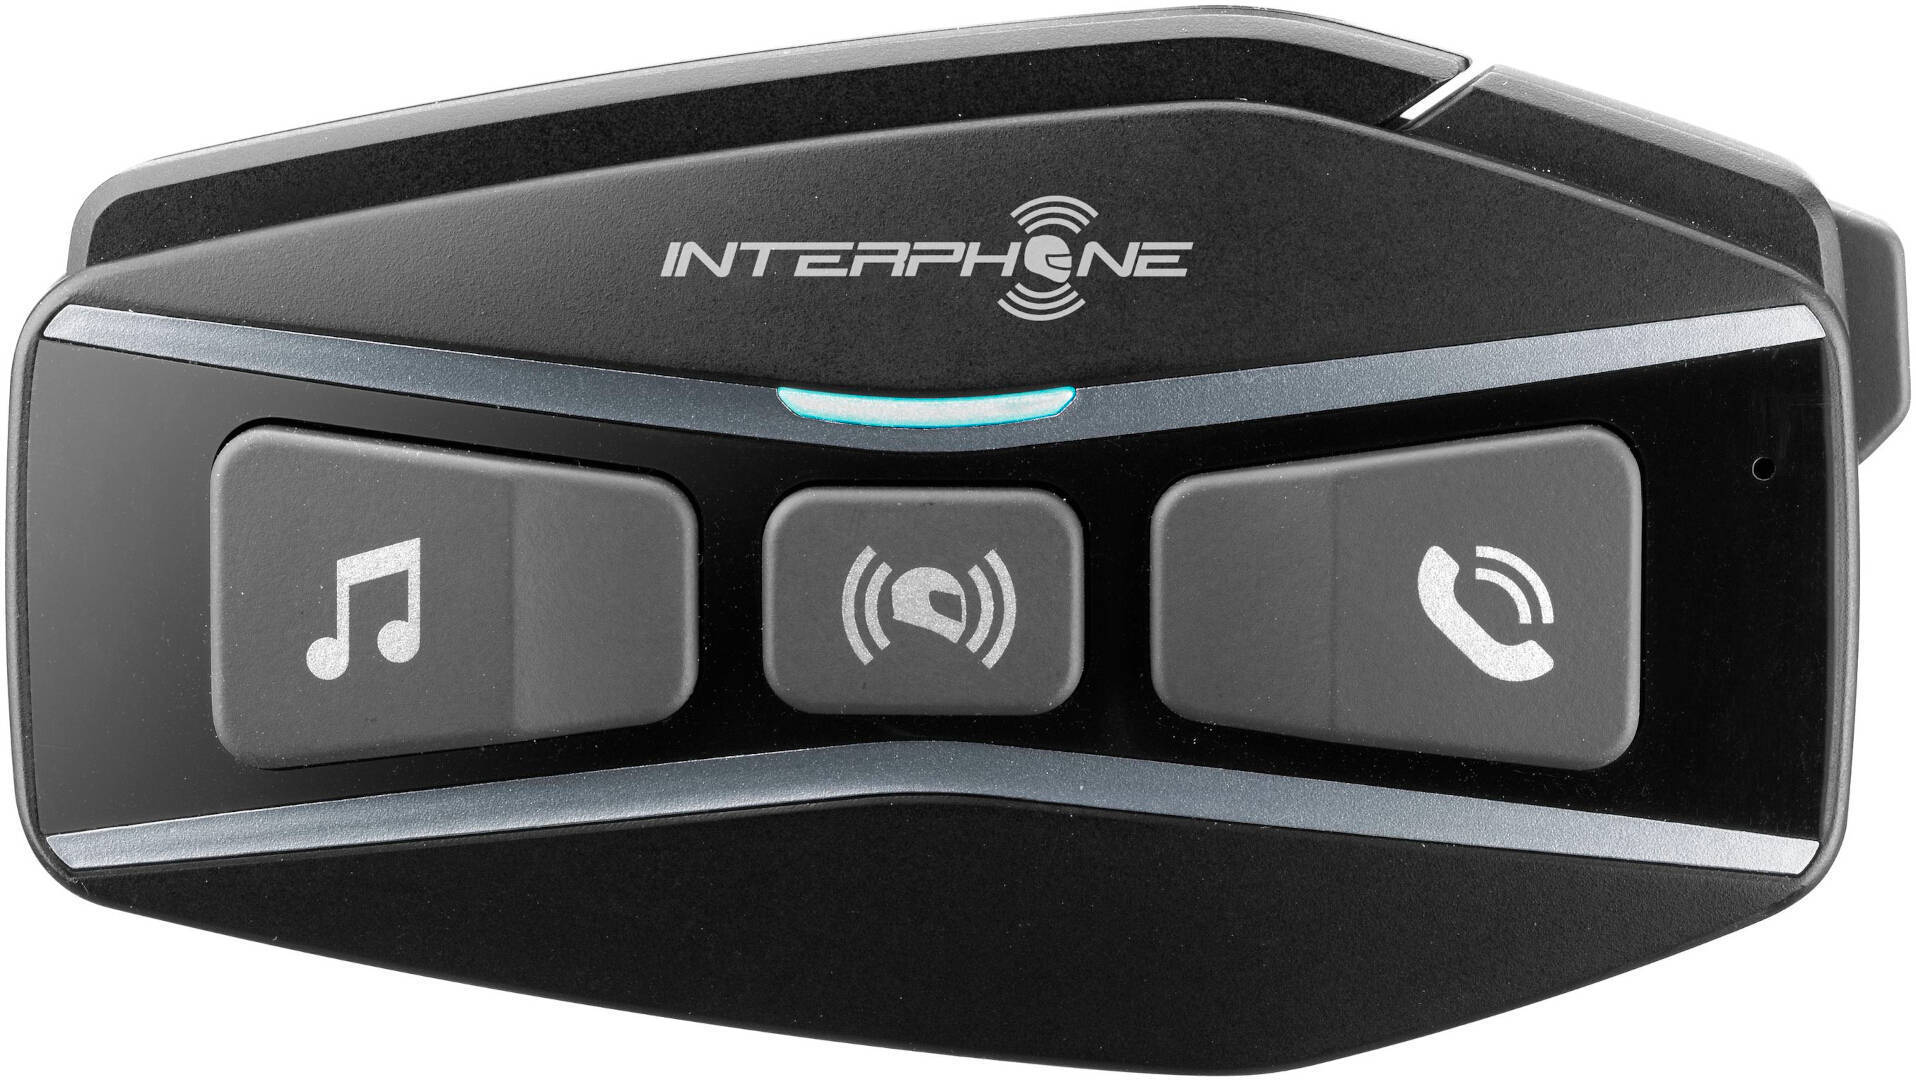 Interphone U-com 16 Sistema de comunicación Bluetooth single pack - Negro (un tamaño)